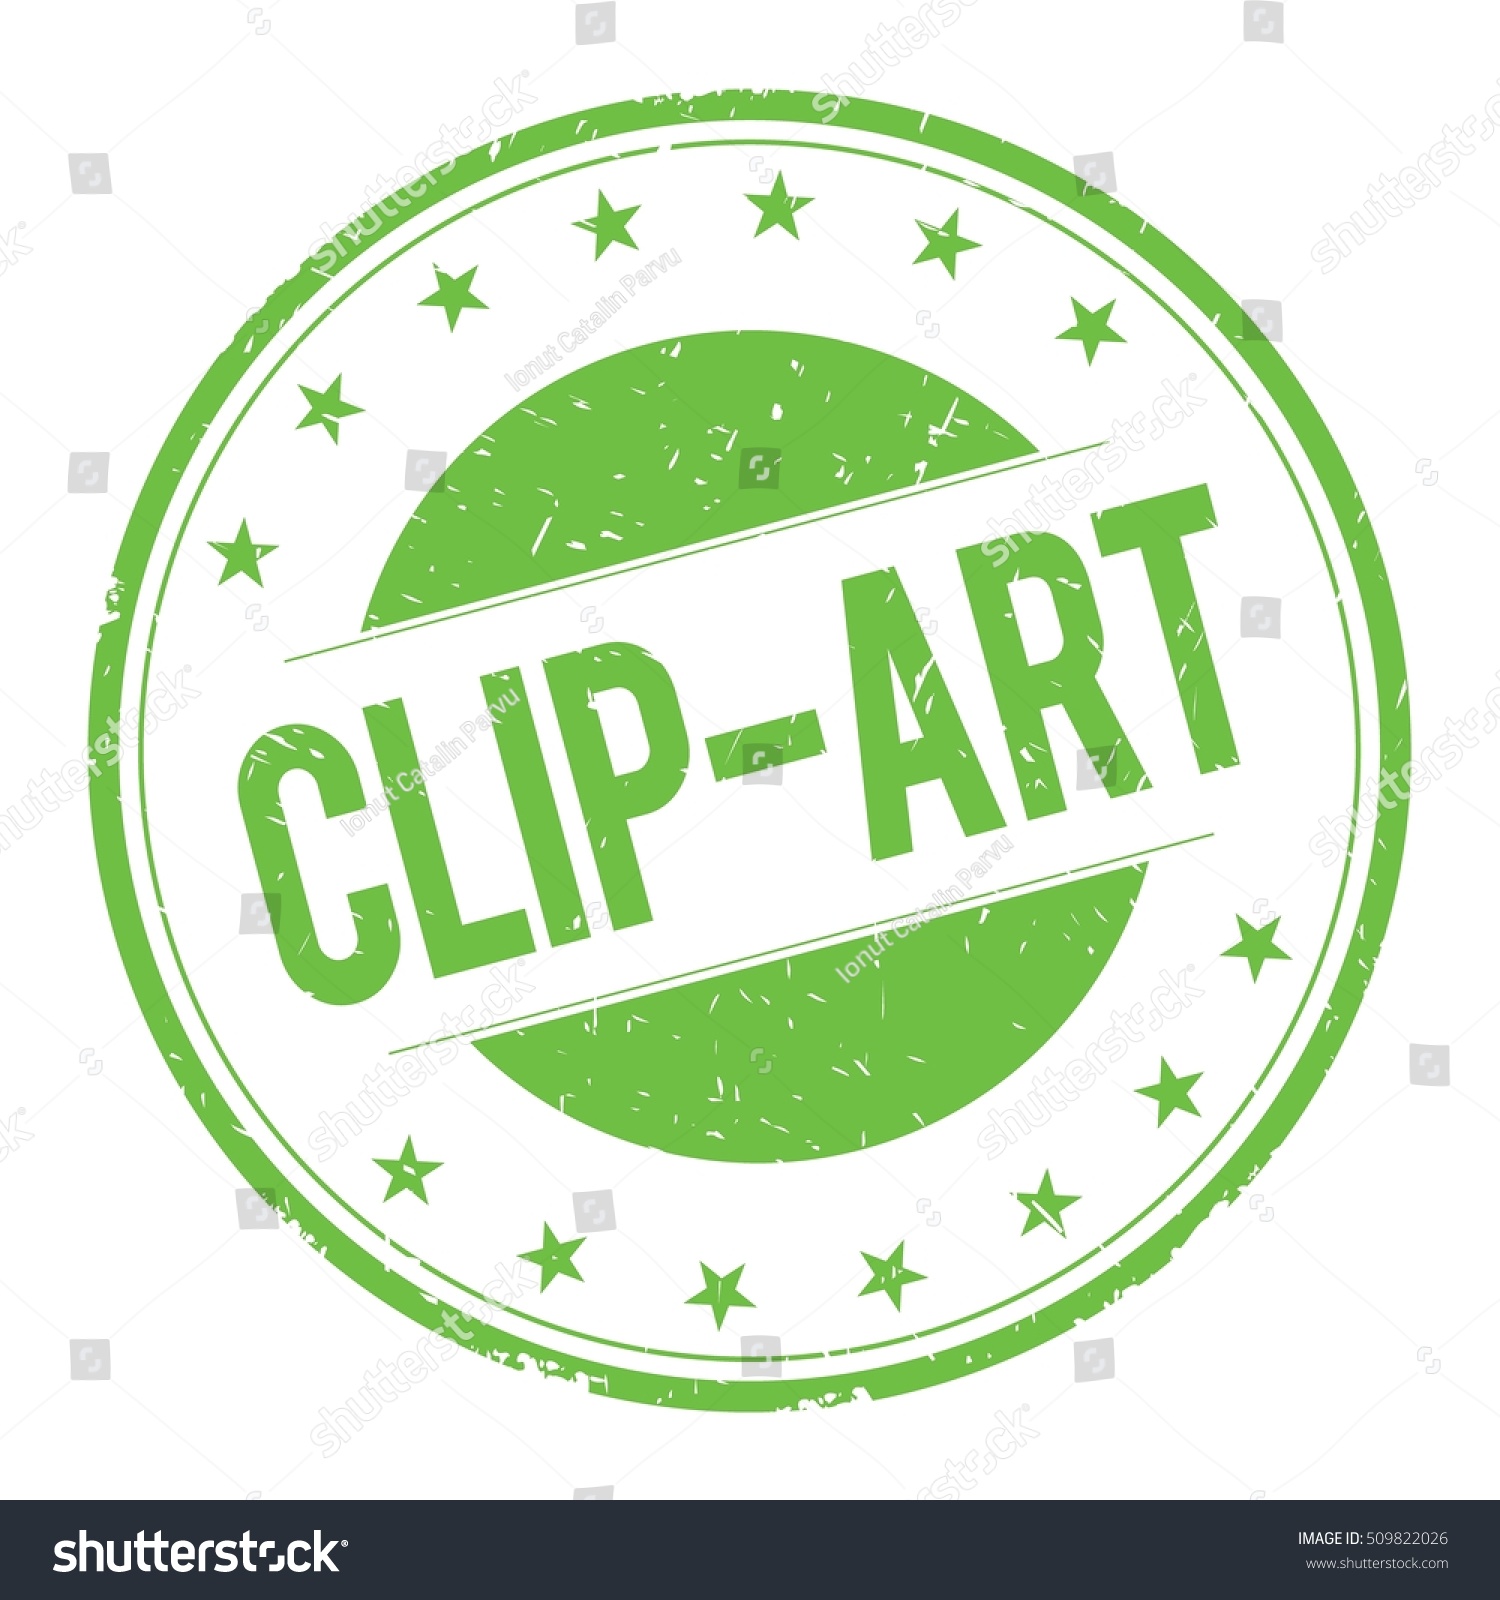 clip art text word - photo #47